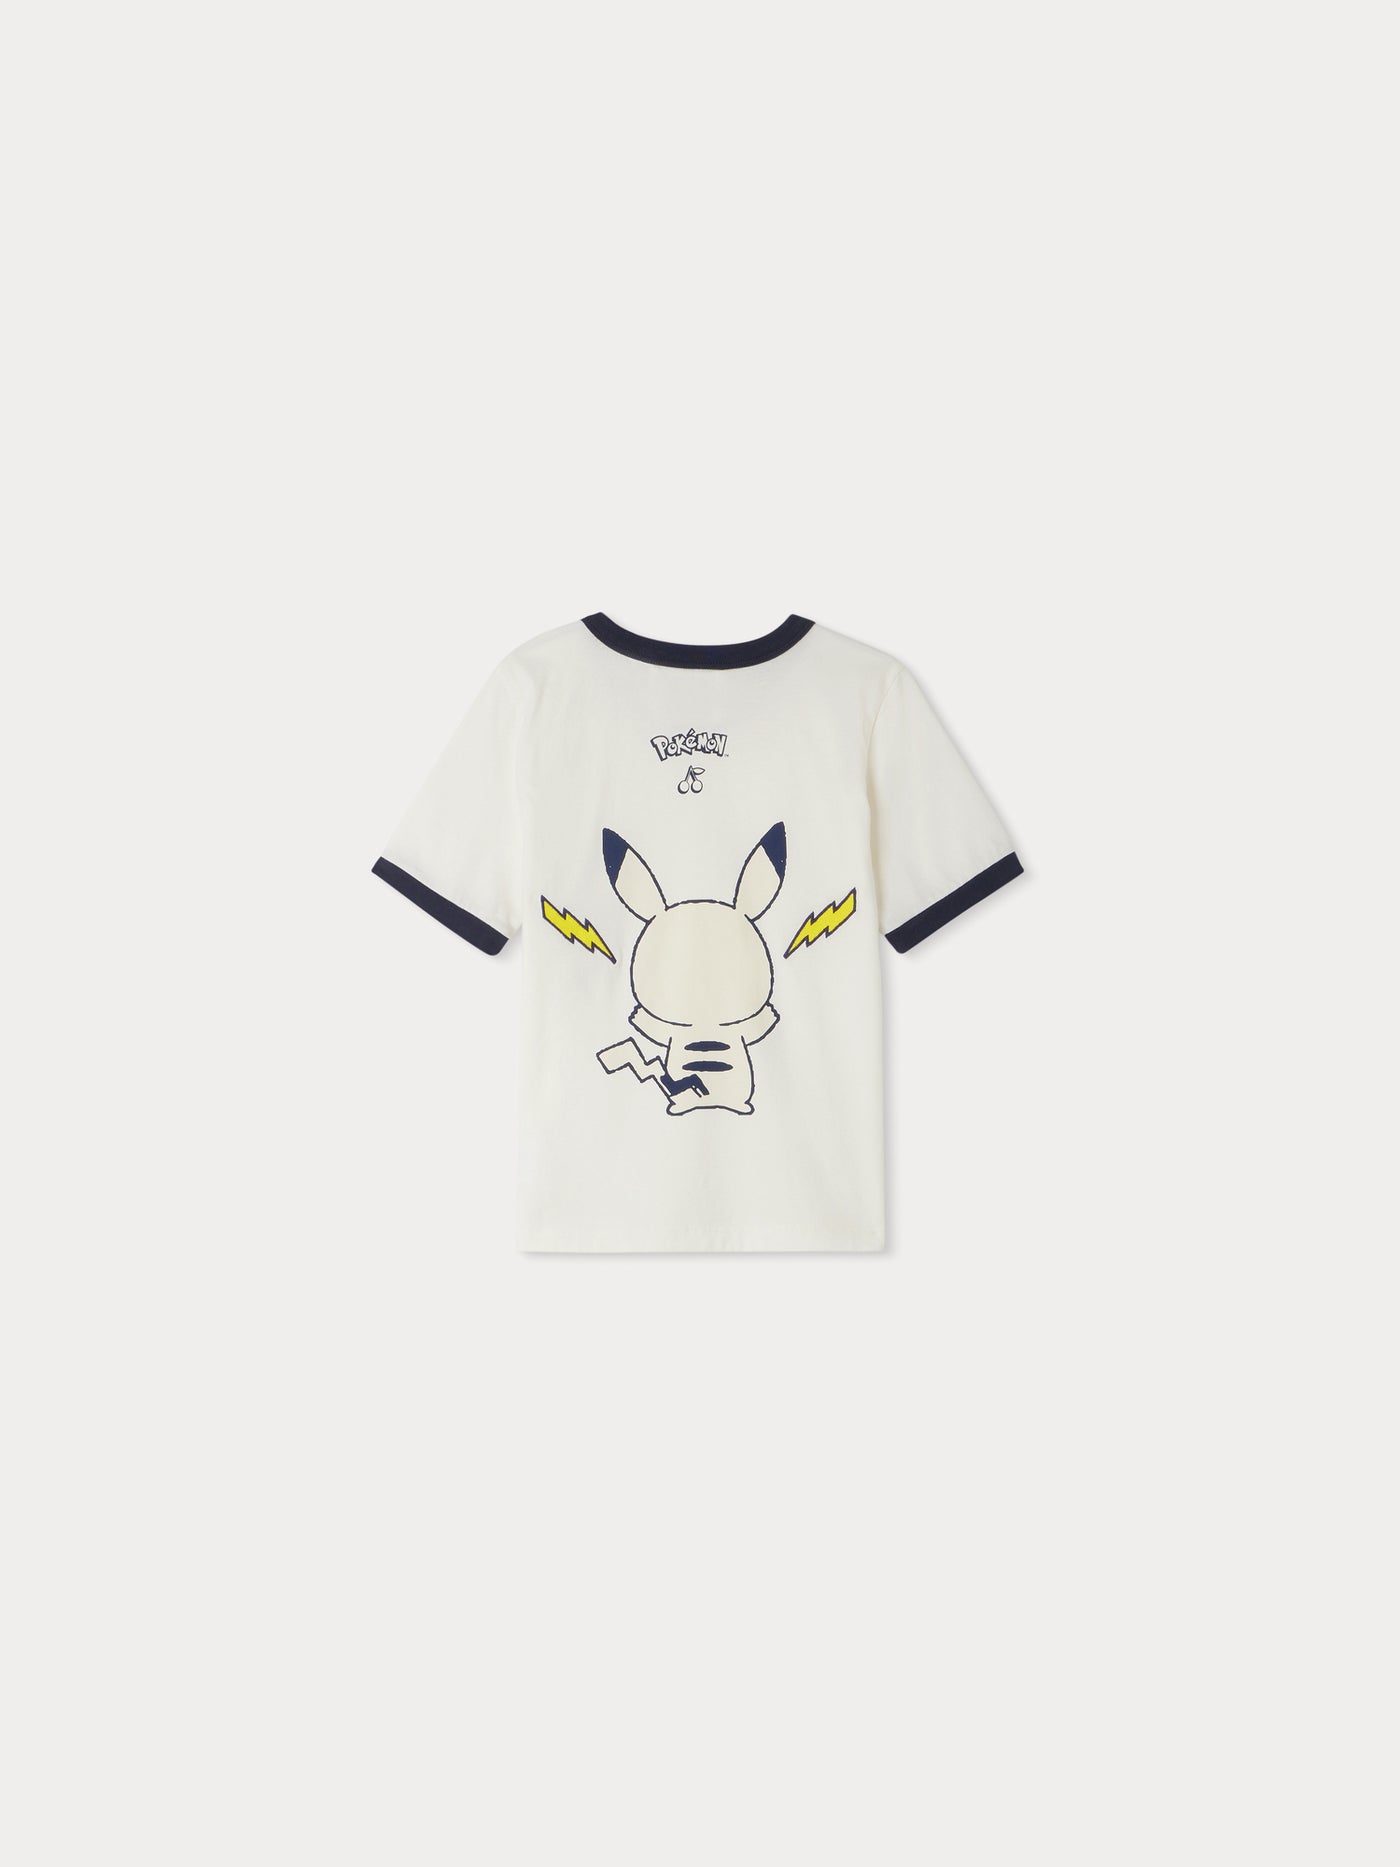 Bonpoint x Pokémon Fortunato T-Shirt weiß milch